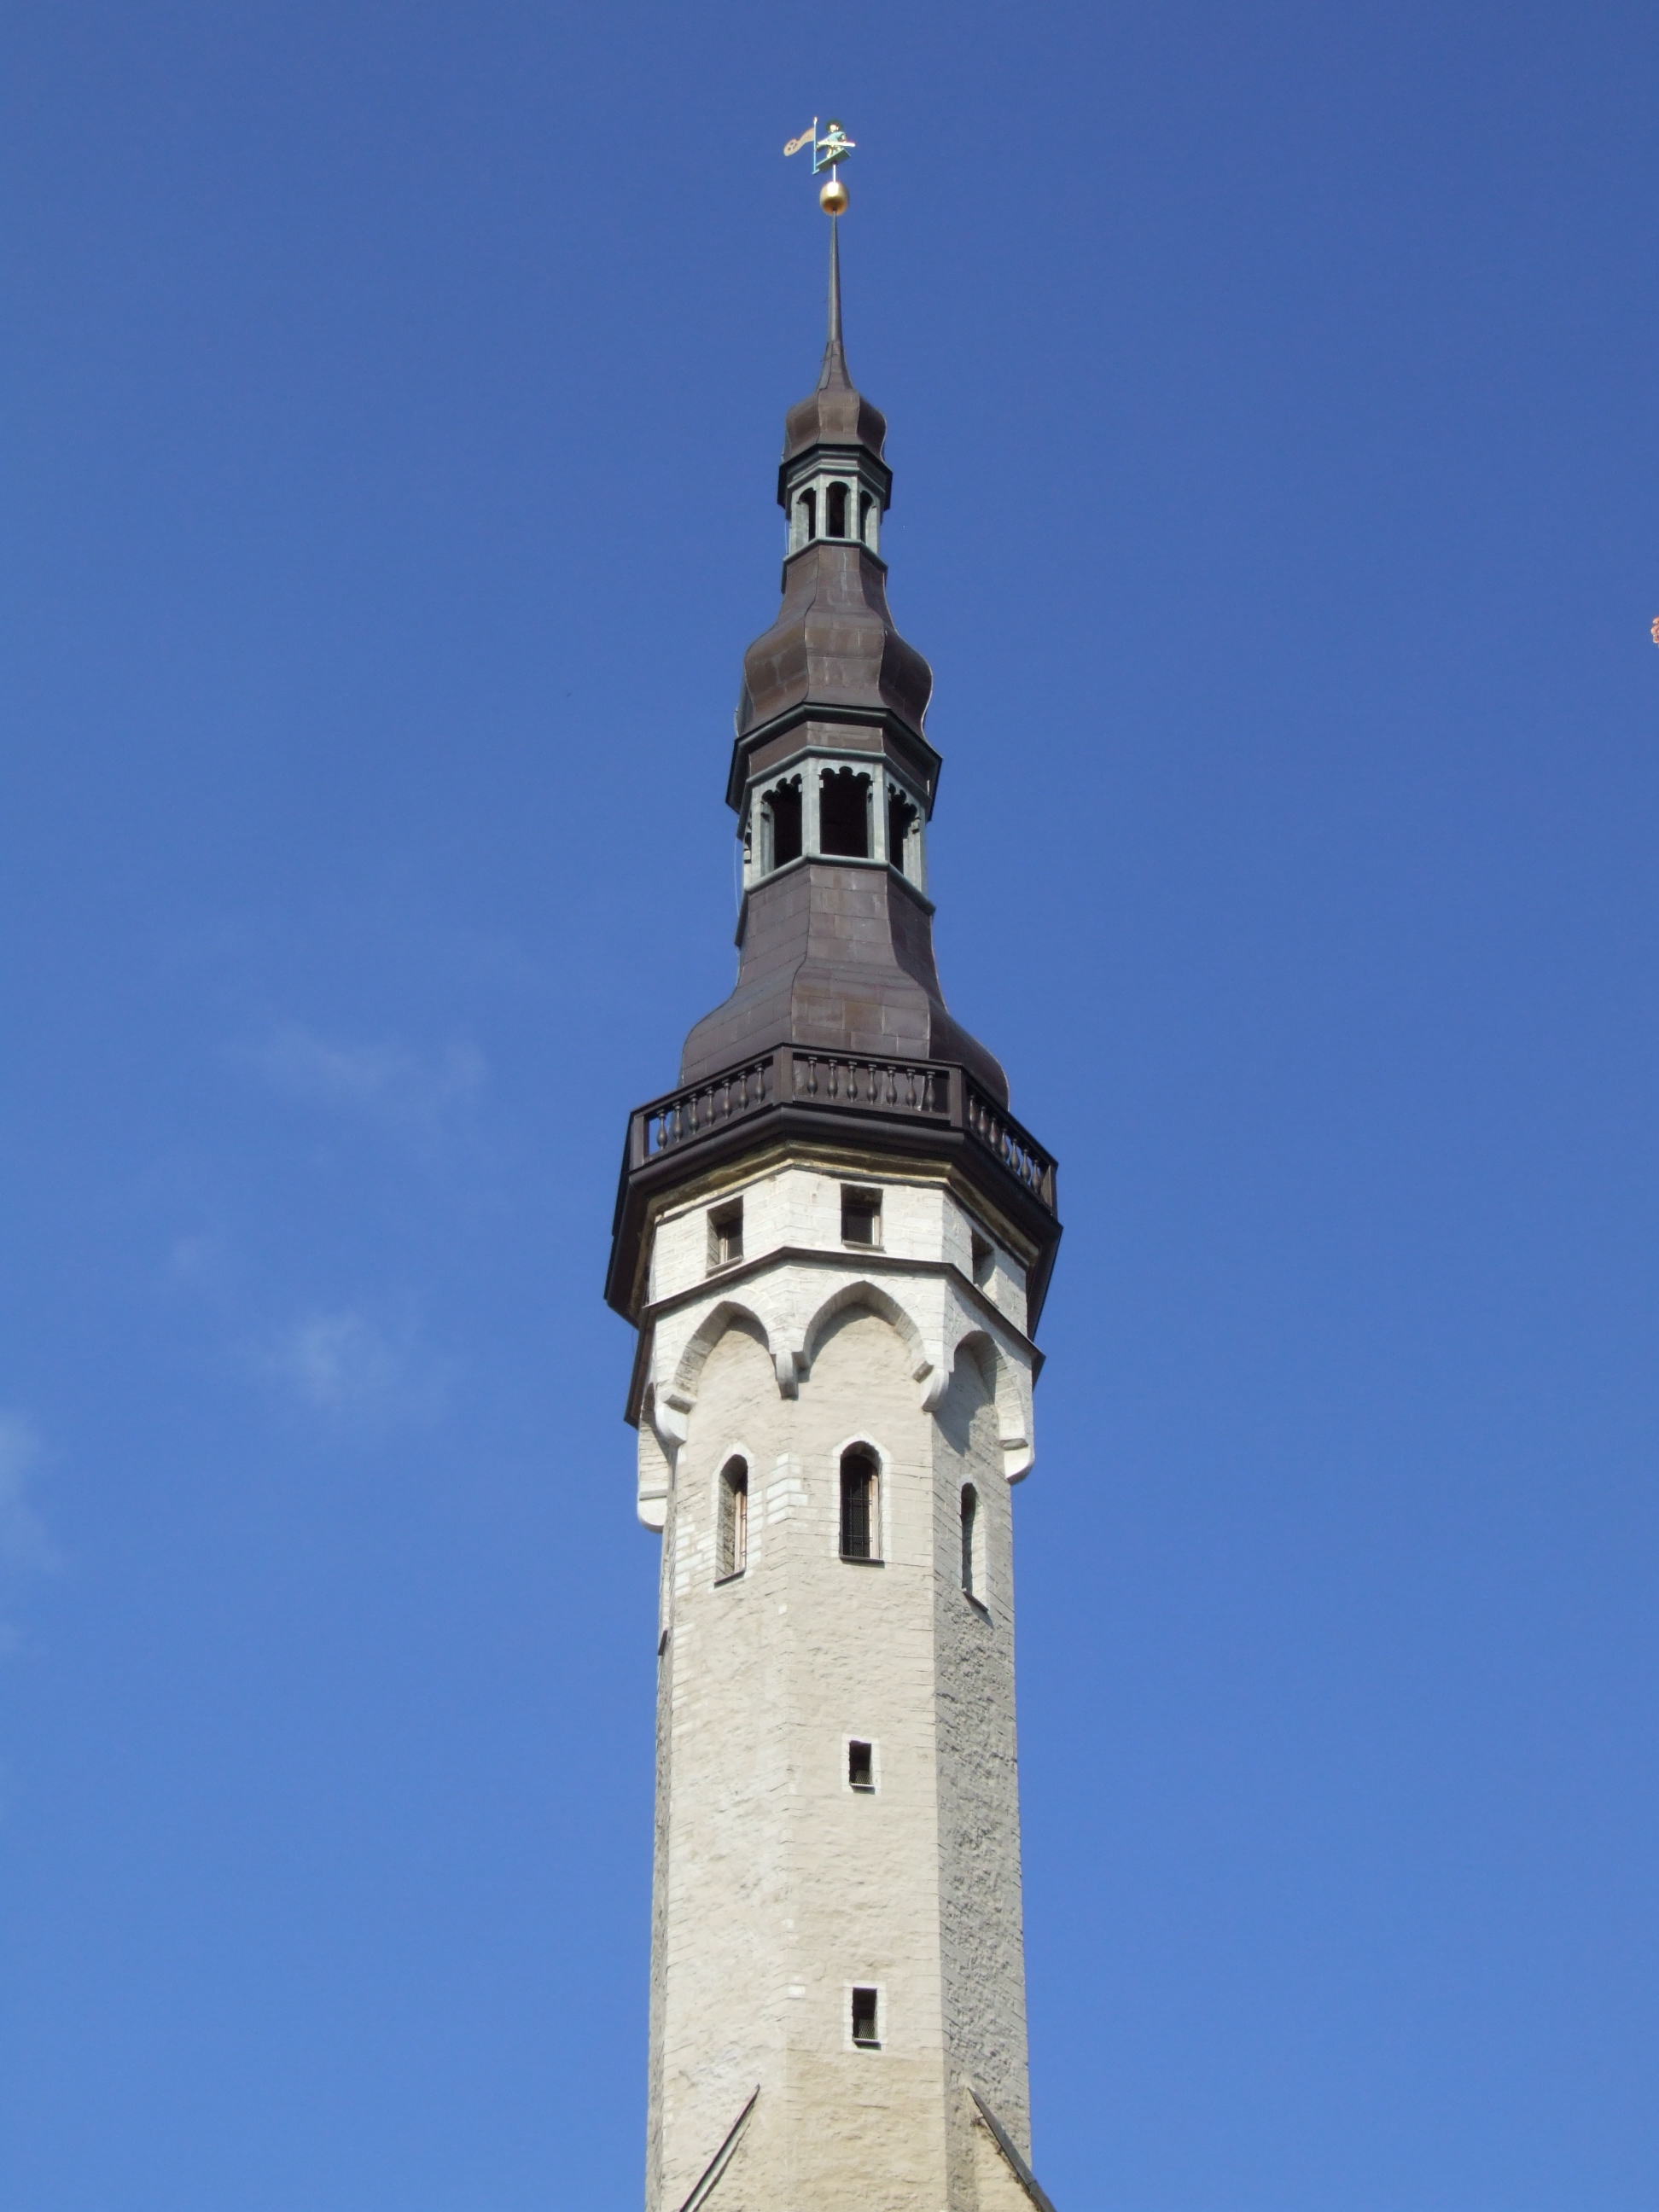 Tower of Tallinn city hall